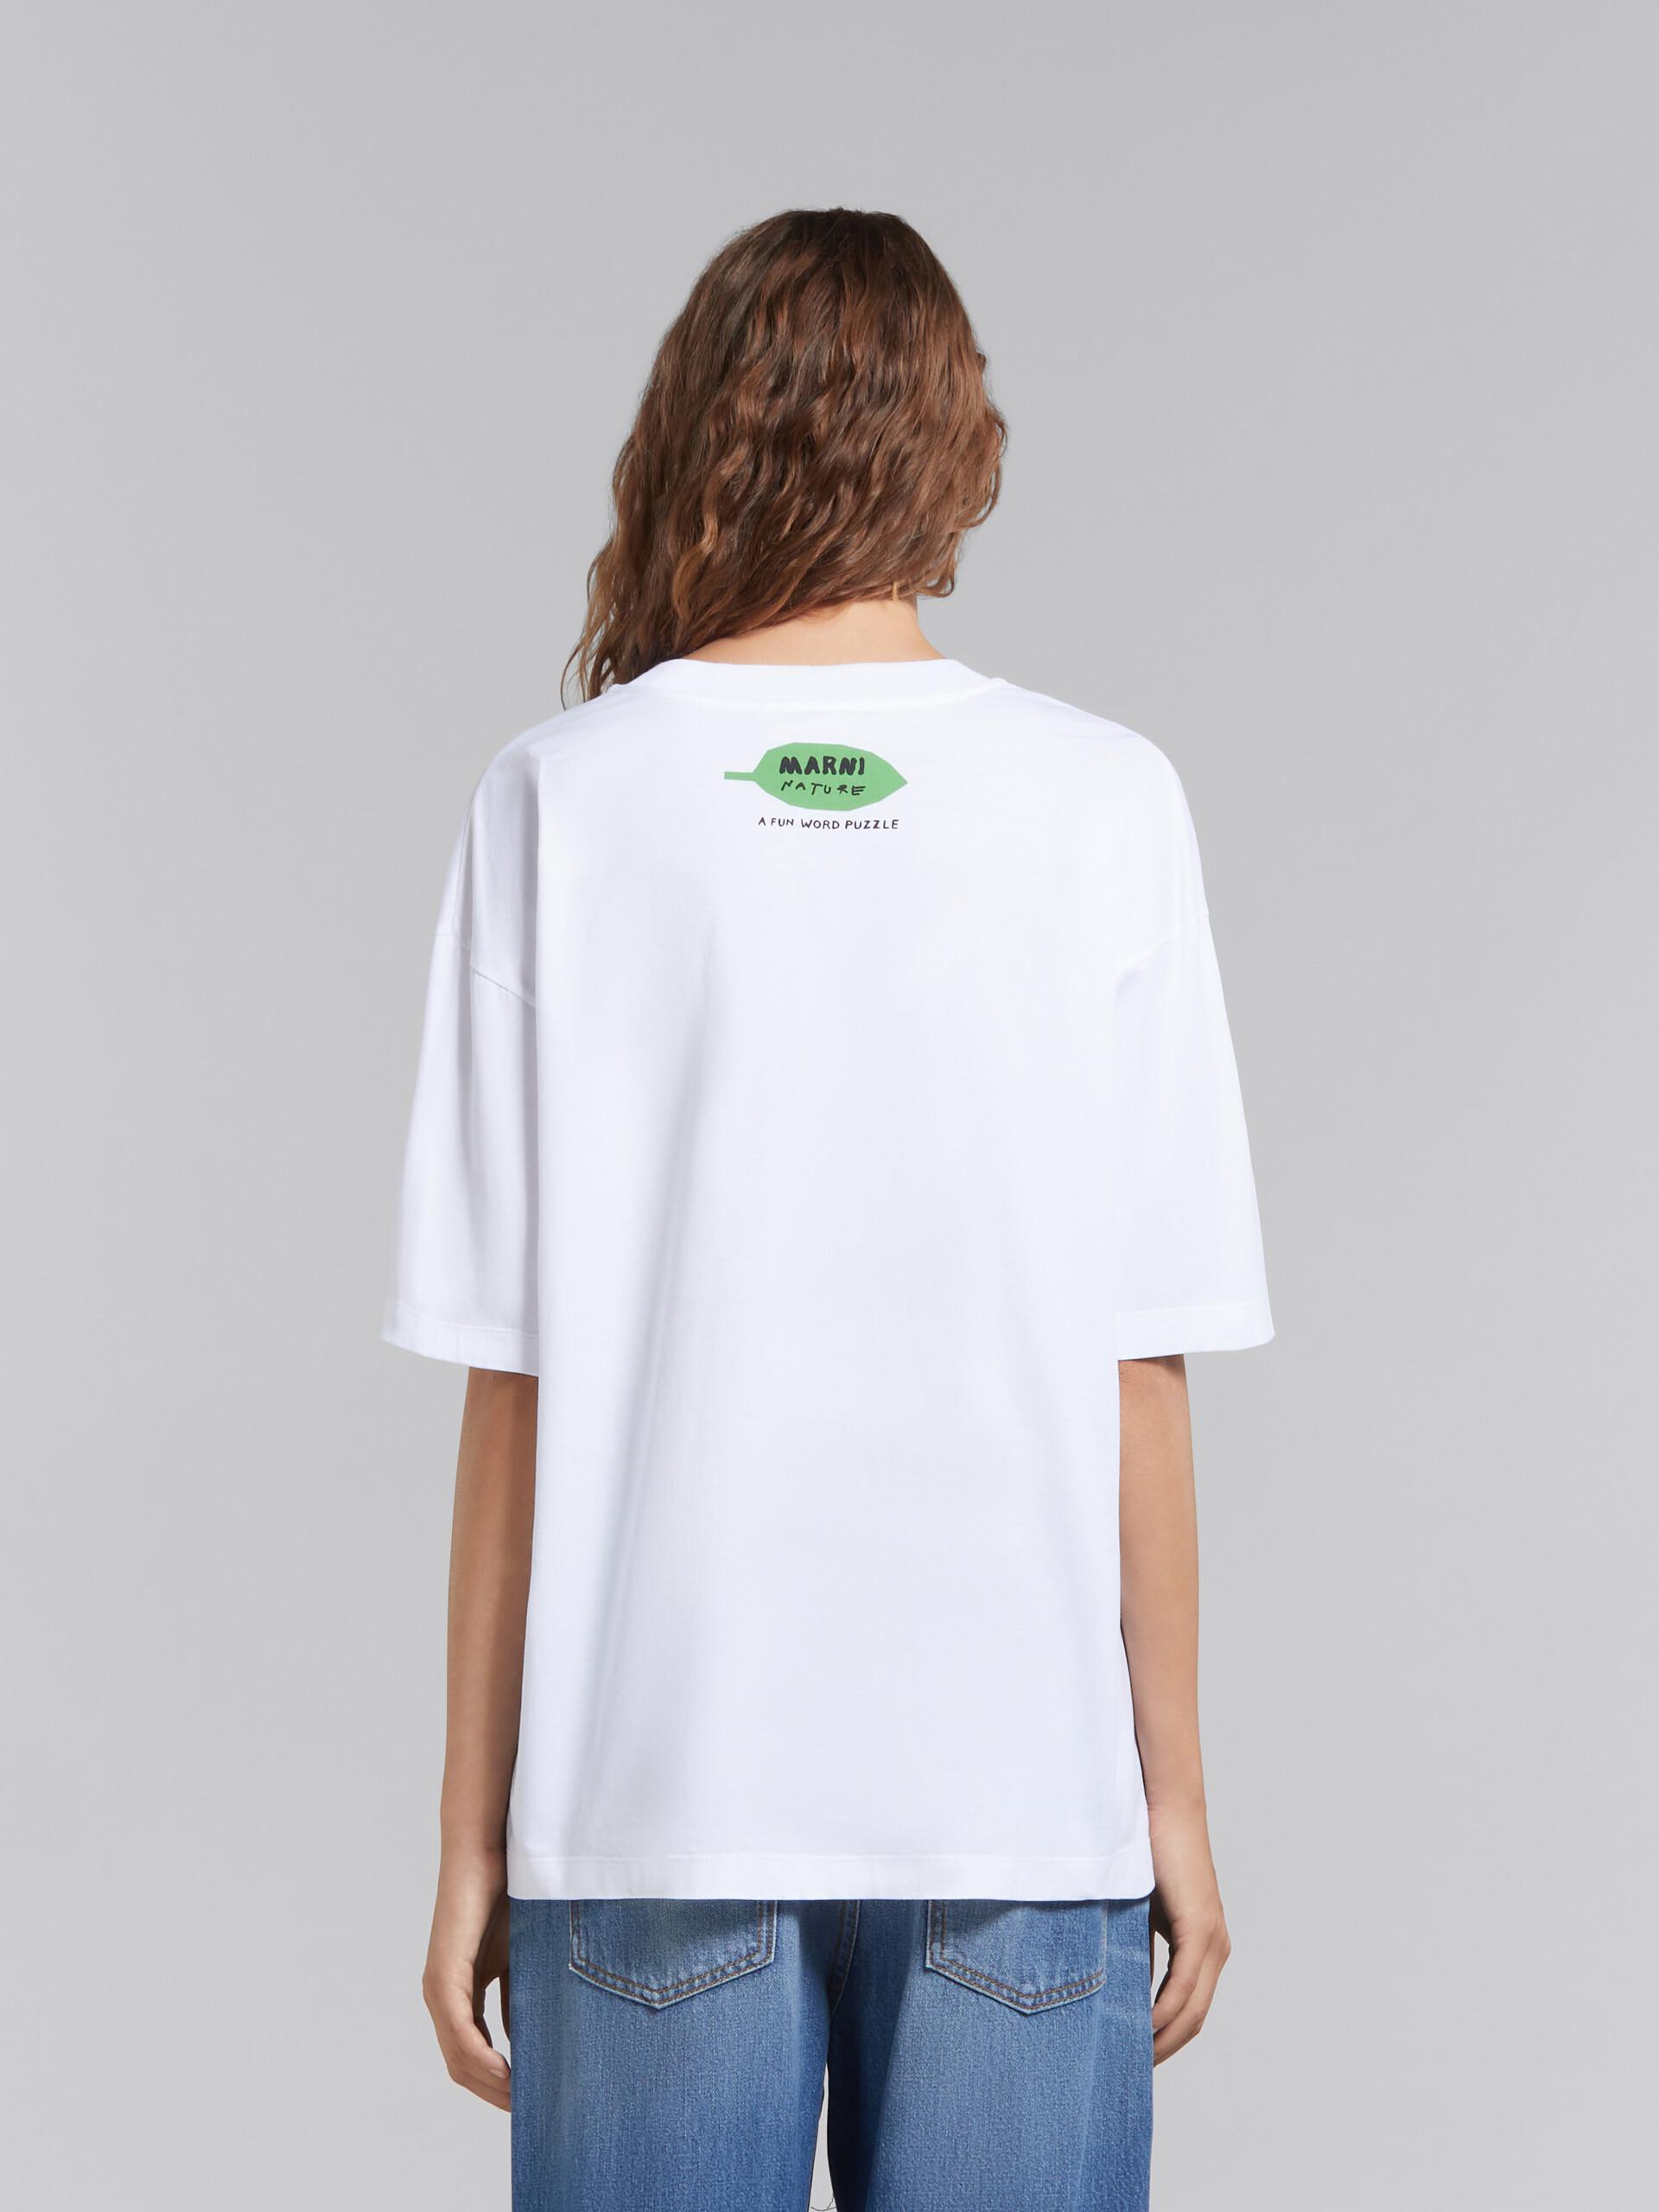 T-shirt in cotone biologico bianco con stampa a fiore - T-shirt - Image 3